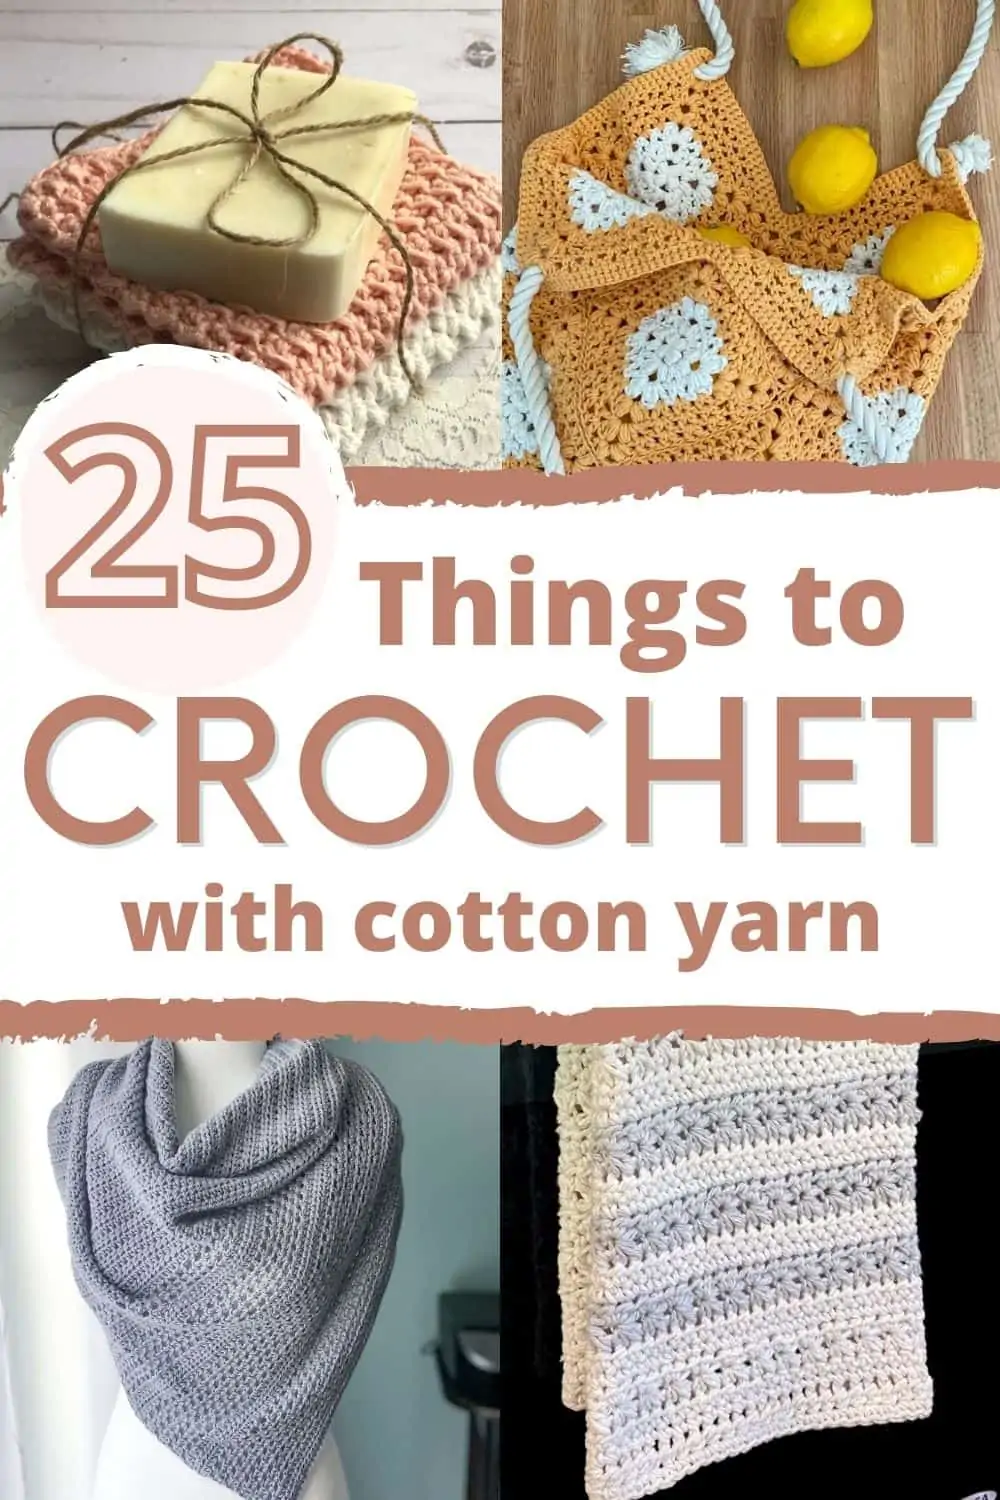 Free Cotton Yarn Crochet Patterns You'll Love - Easy Crochet Patterns